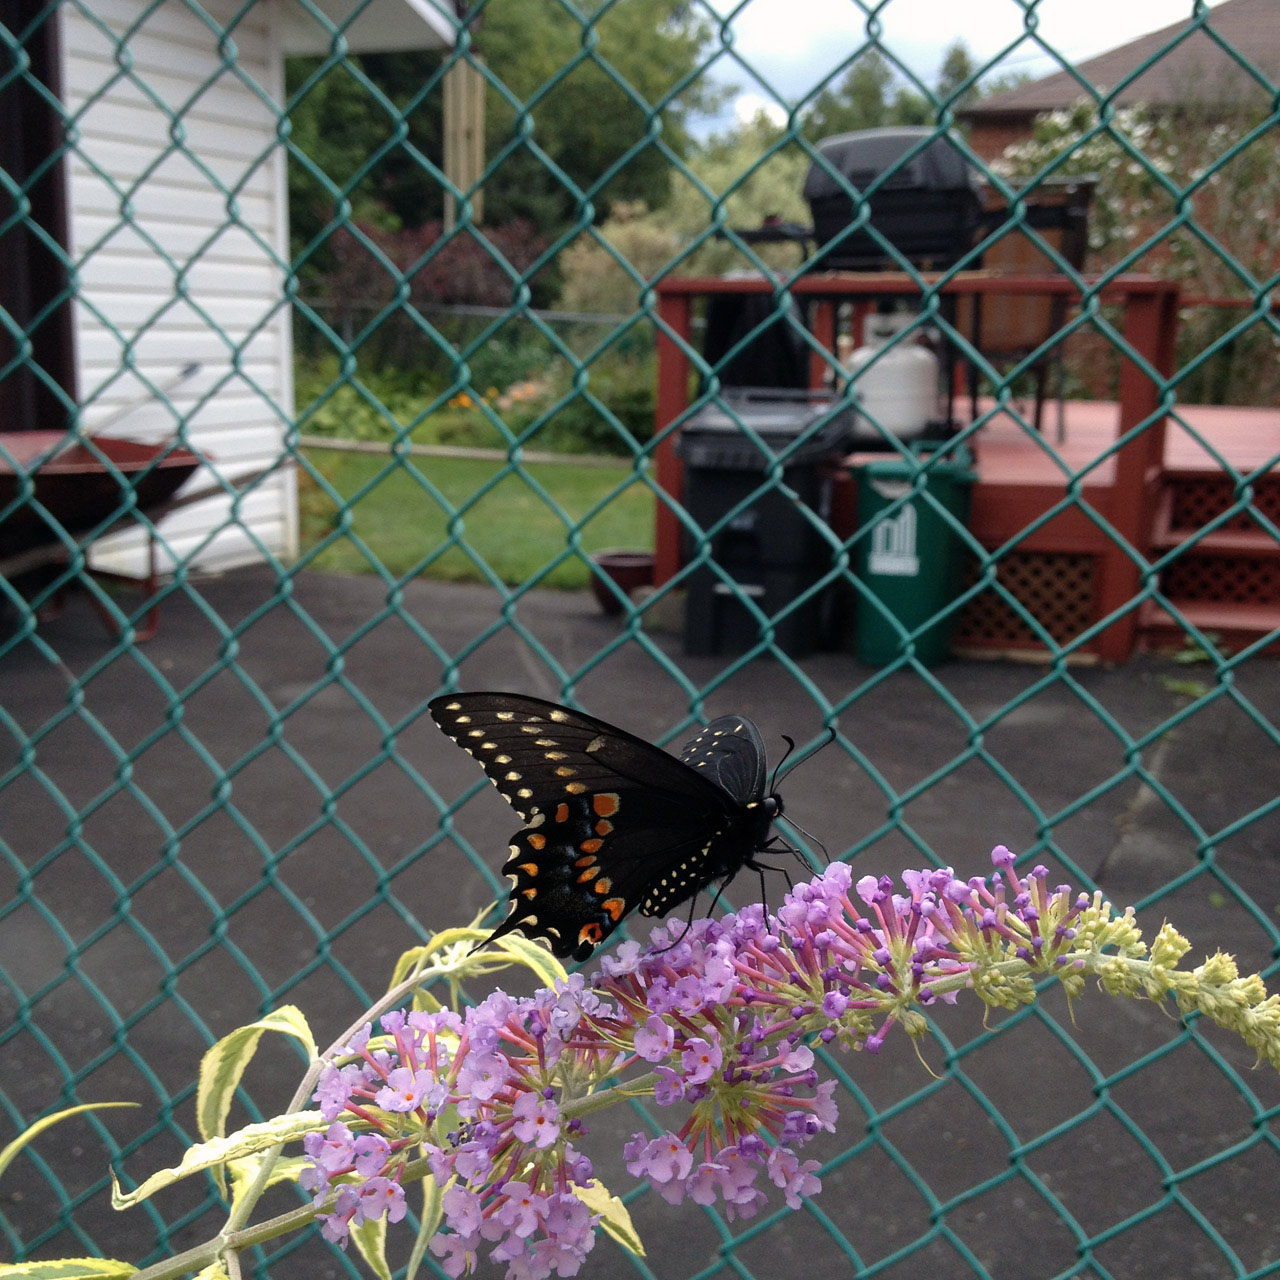 Blakc Swallowtail butterfly. Photo courtesy Denyse Cowan